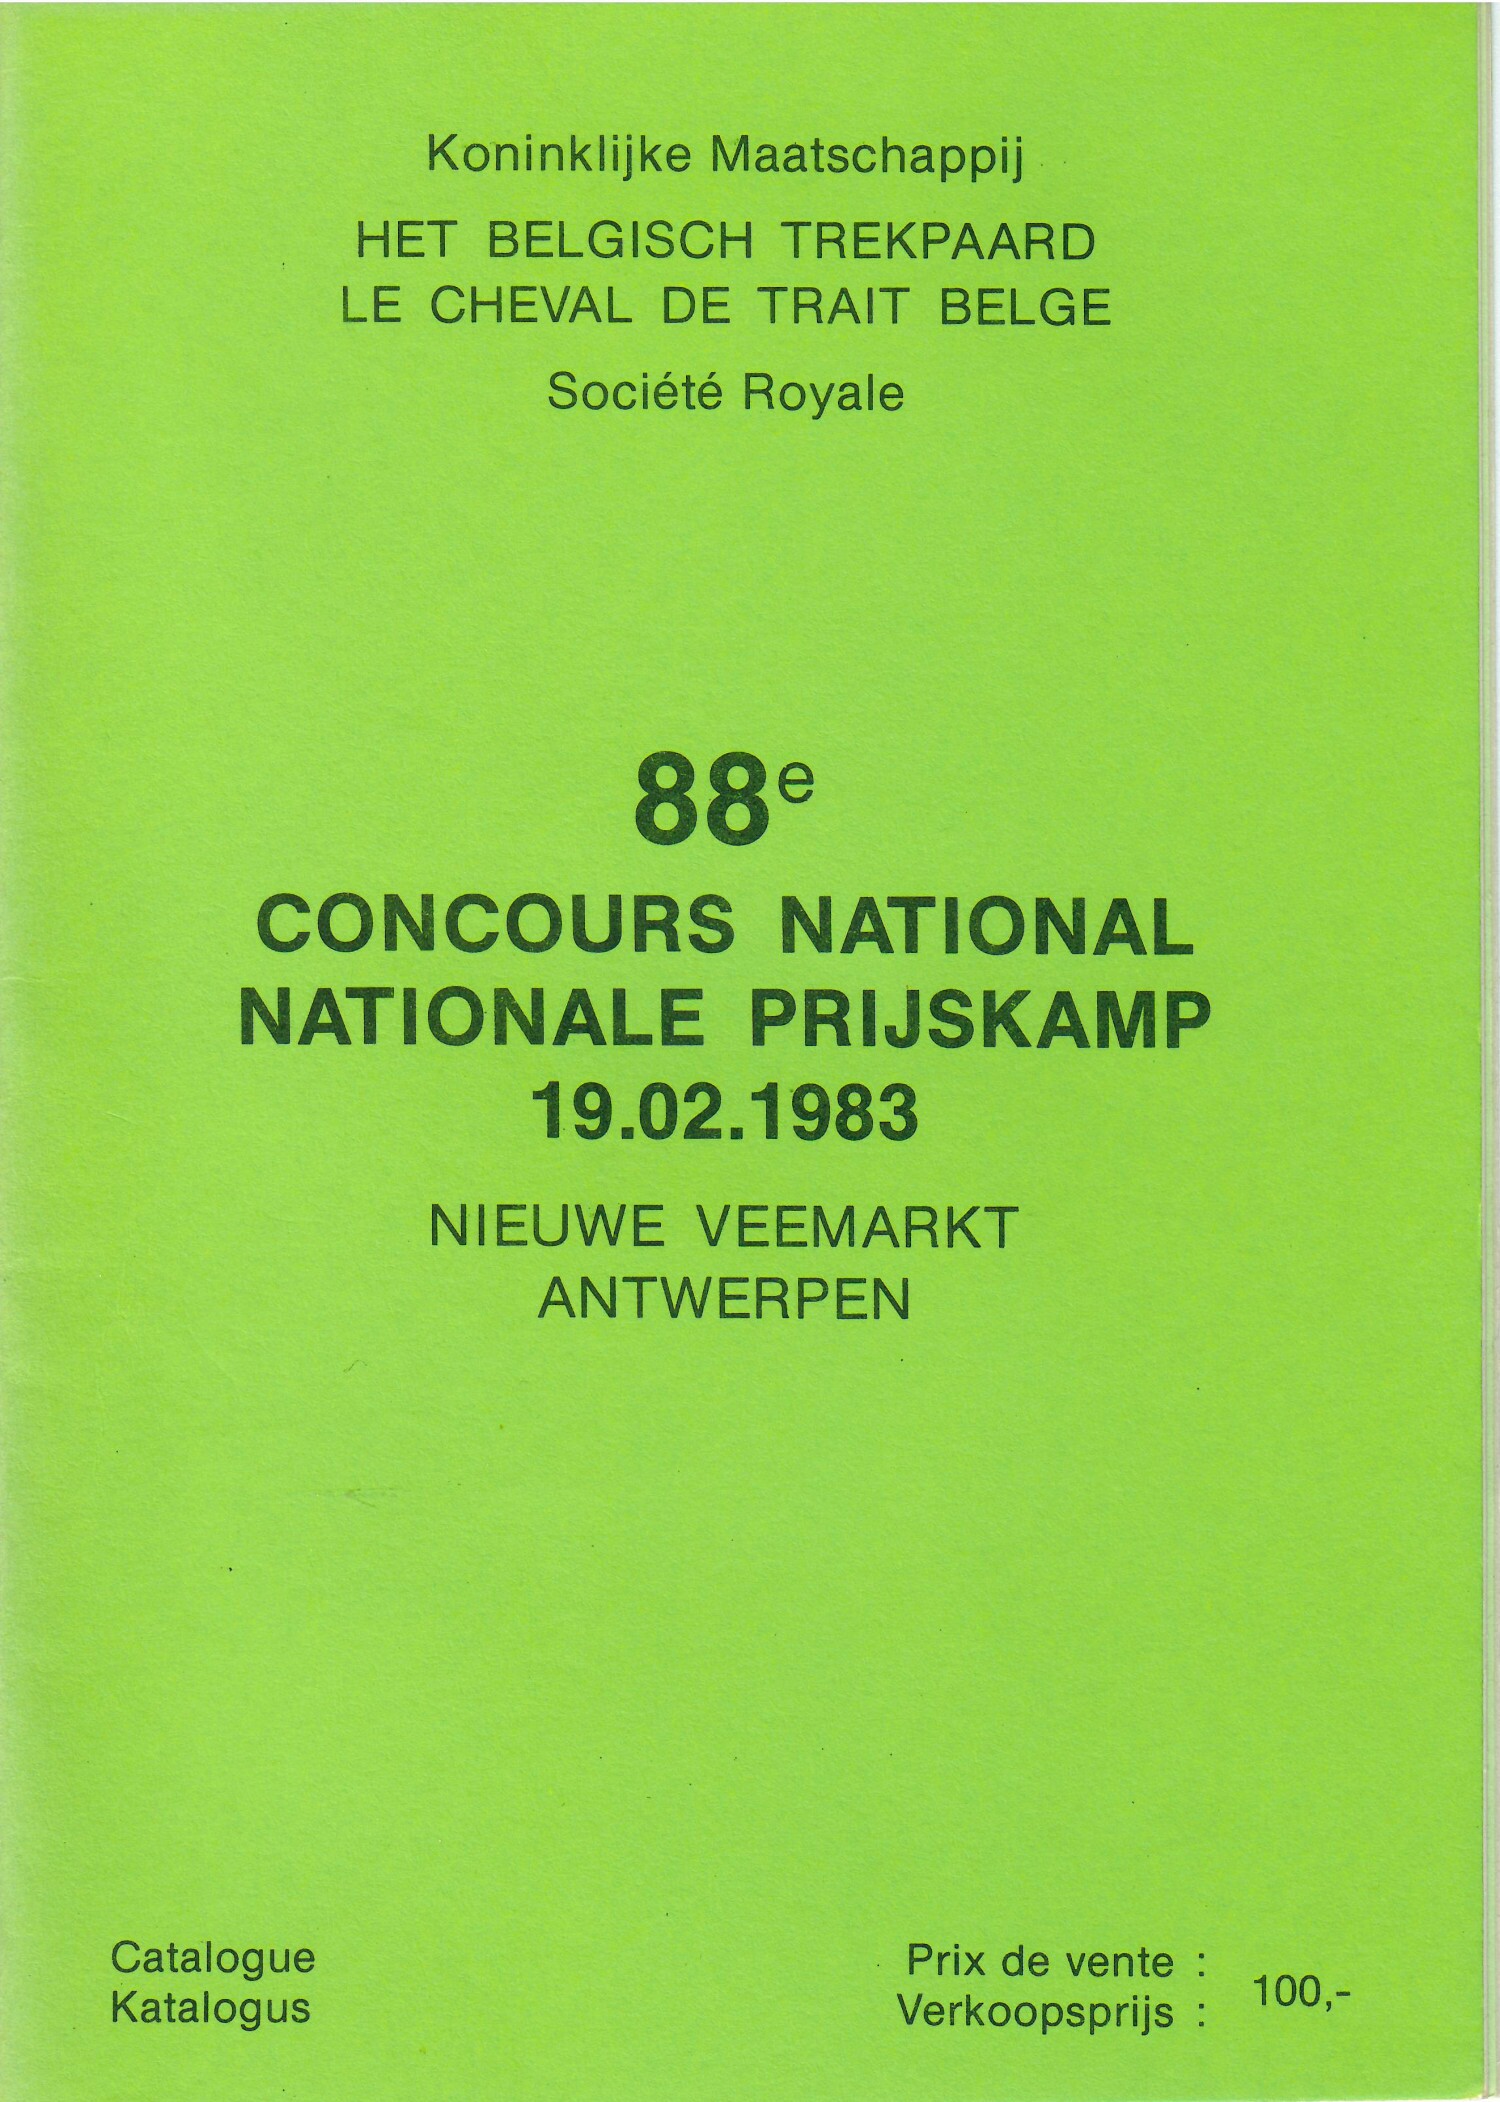 Les Cheval de trait belge et adennes 1984 (Herausgeber RR-R)